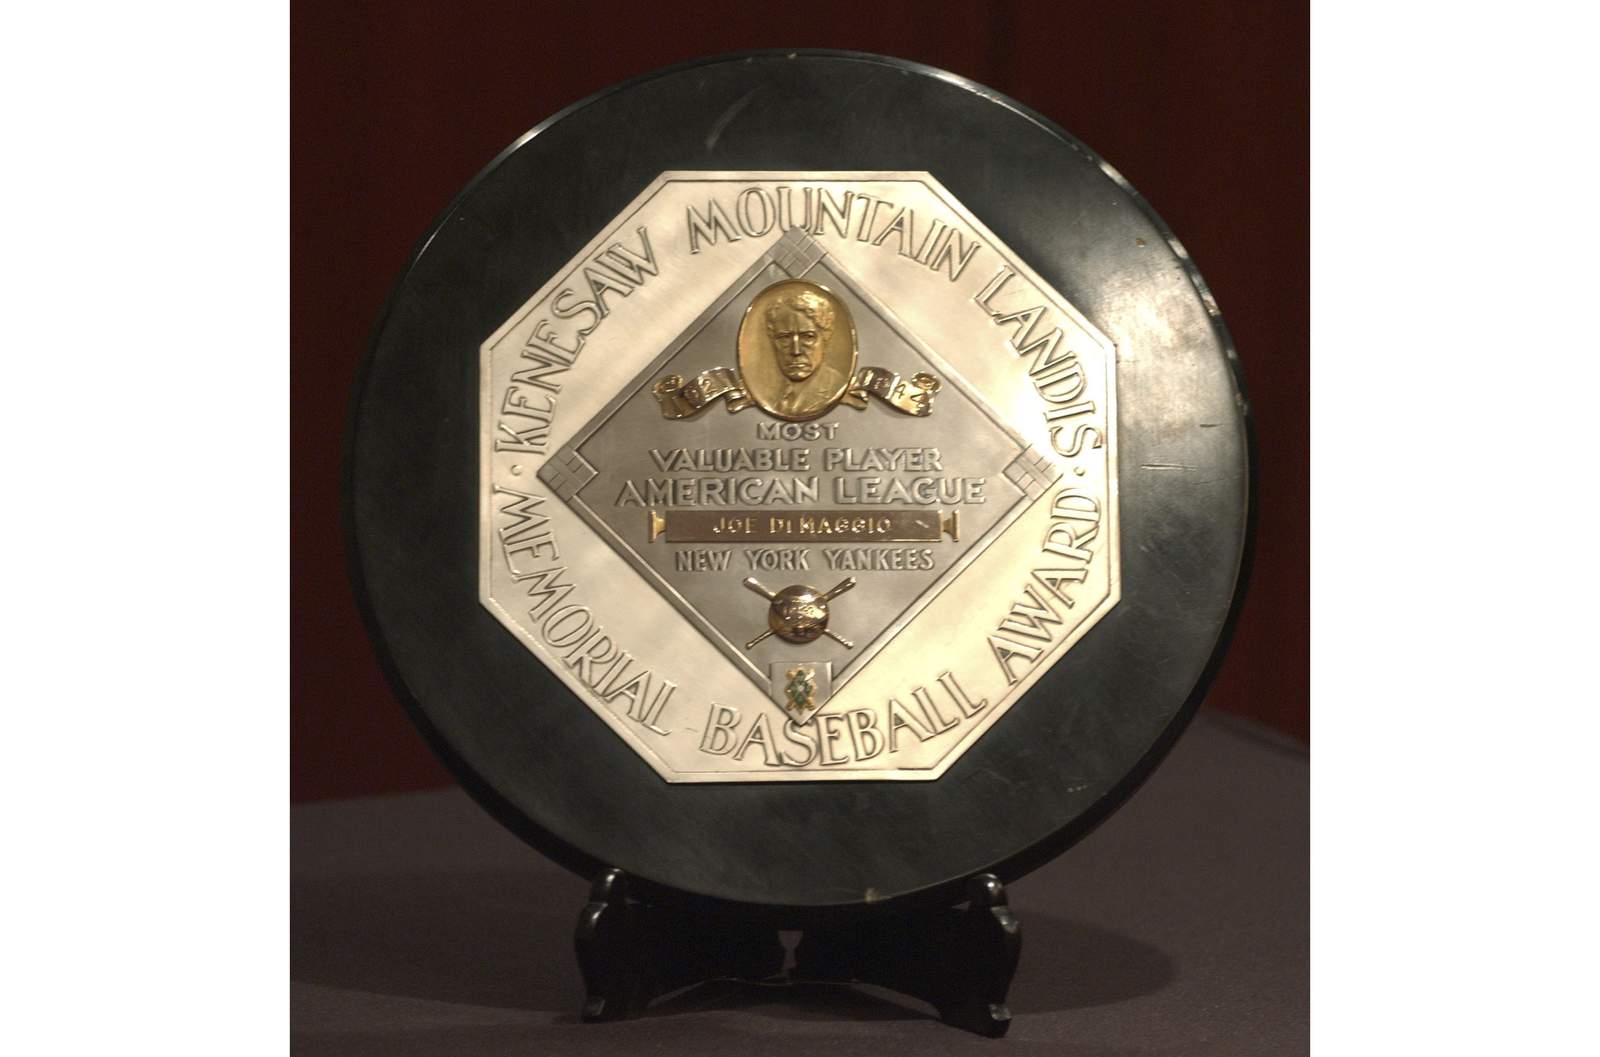 MVP plaque presenters to discuss Landis' name on MLB trophy